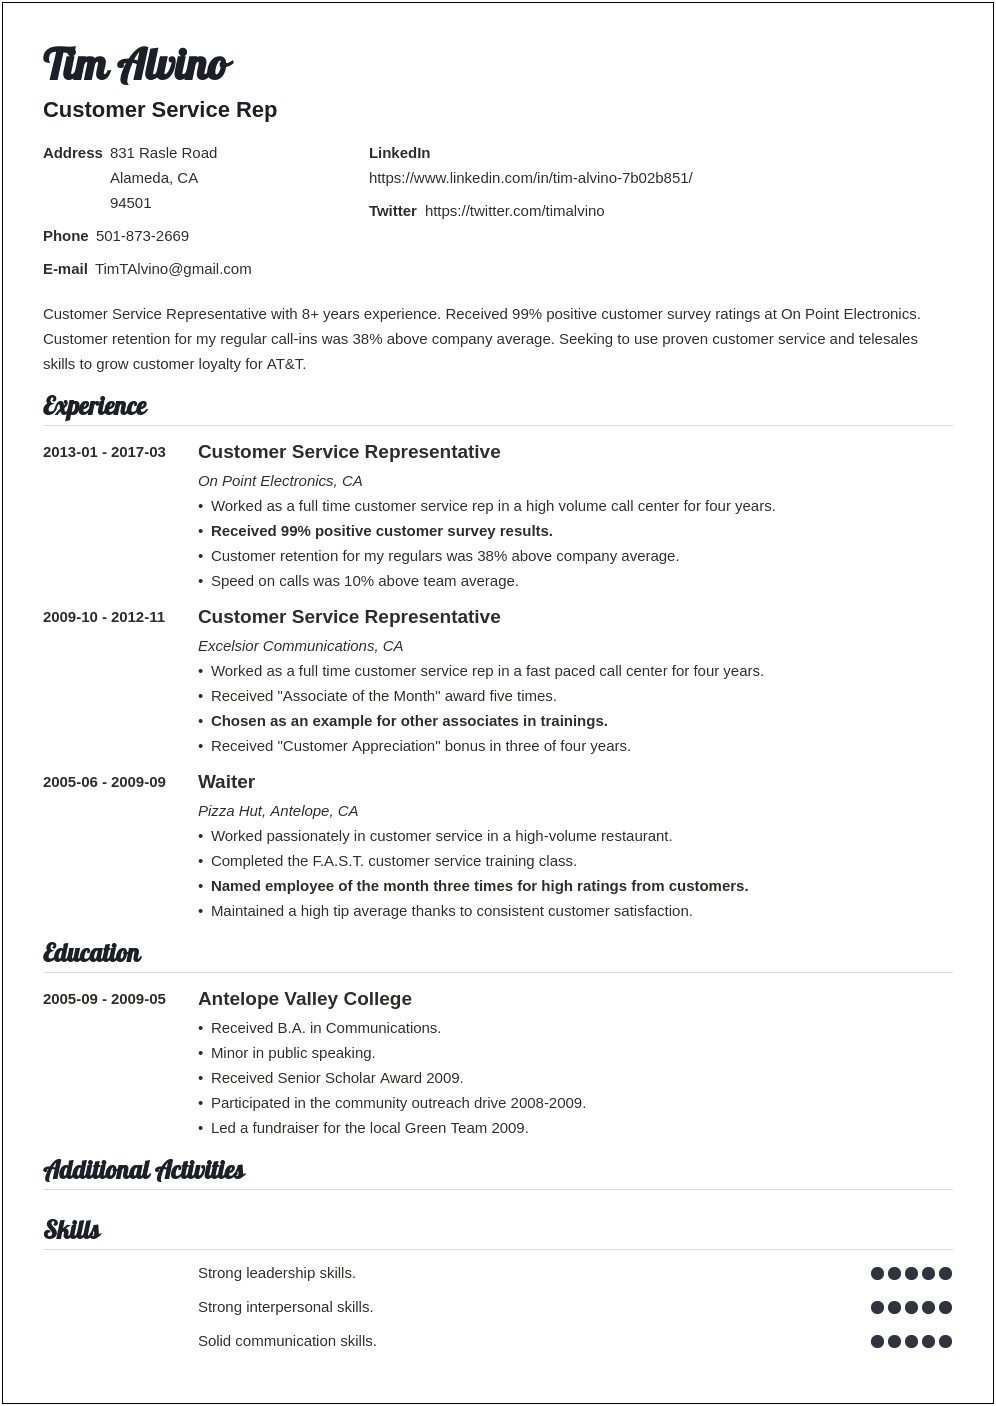 Resume Profile Sample Customer Service